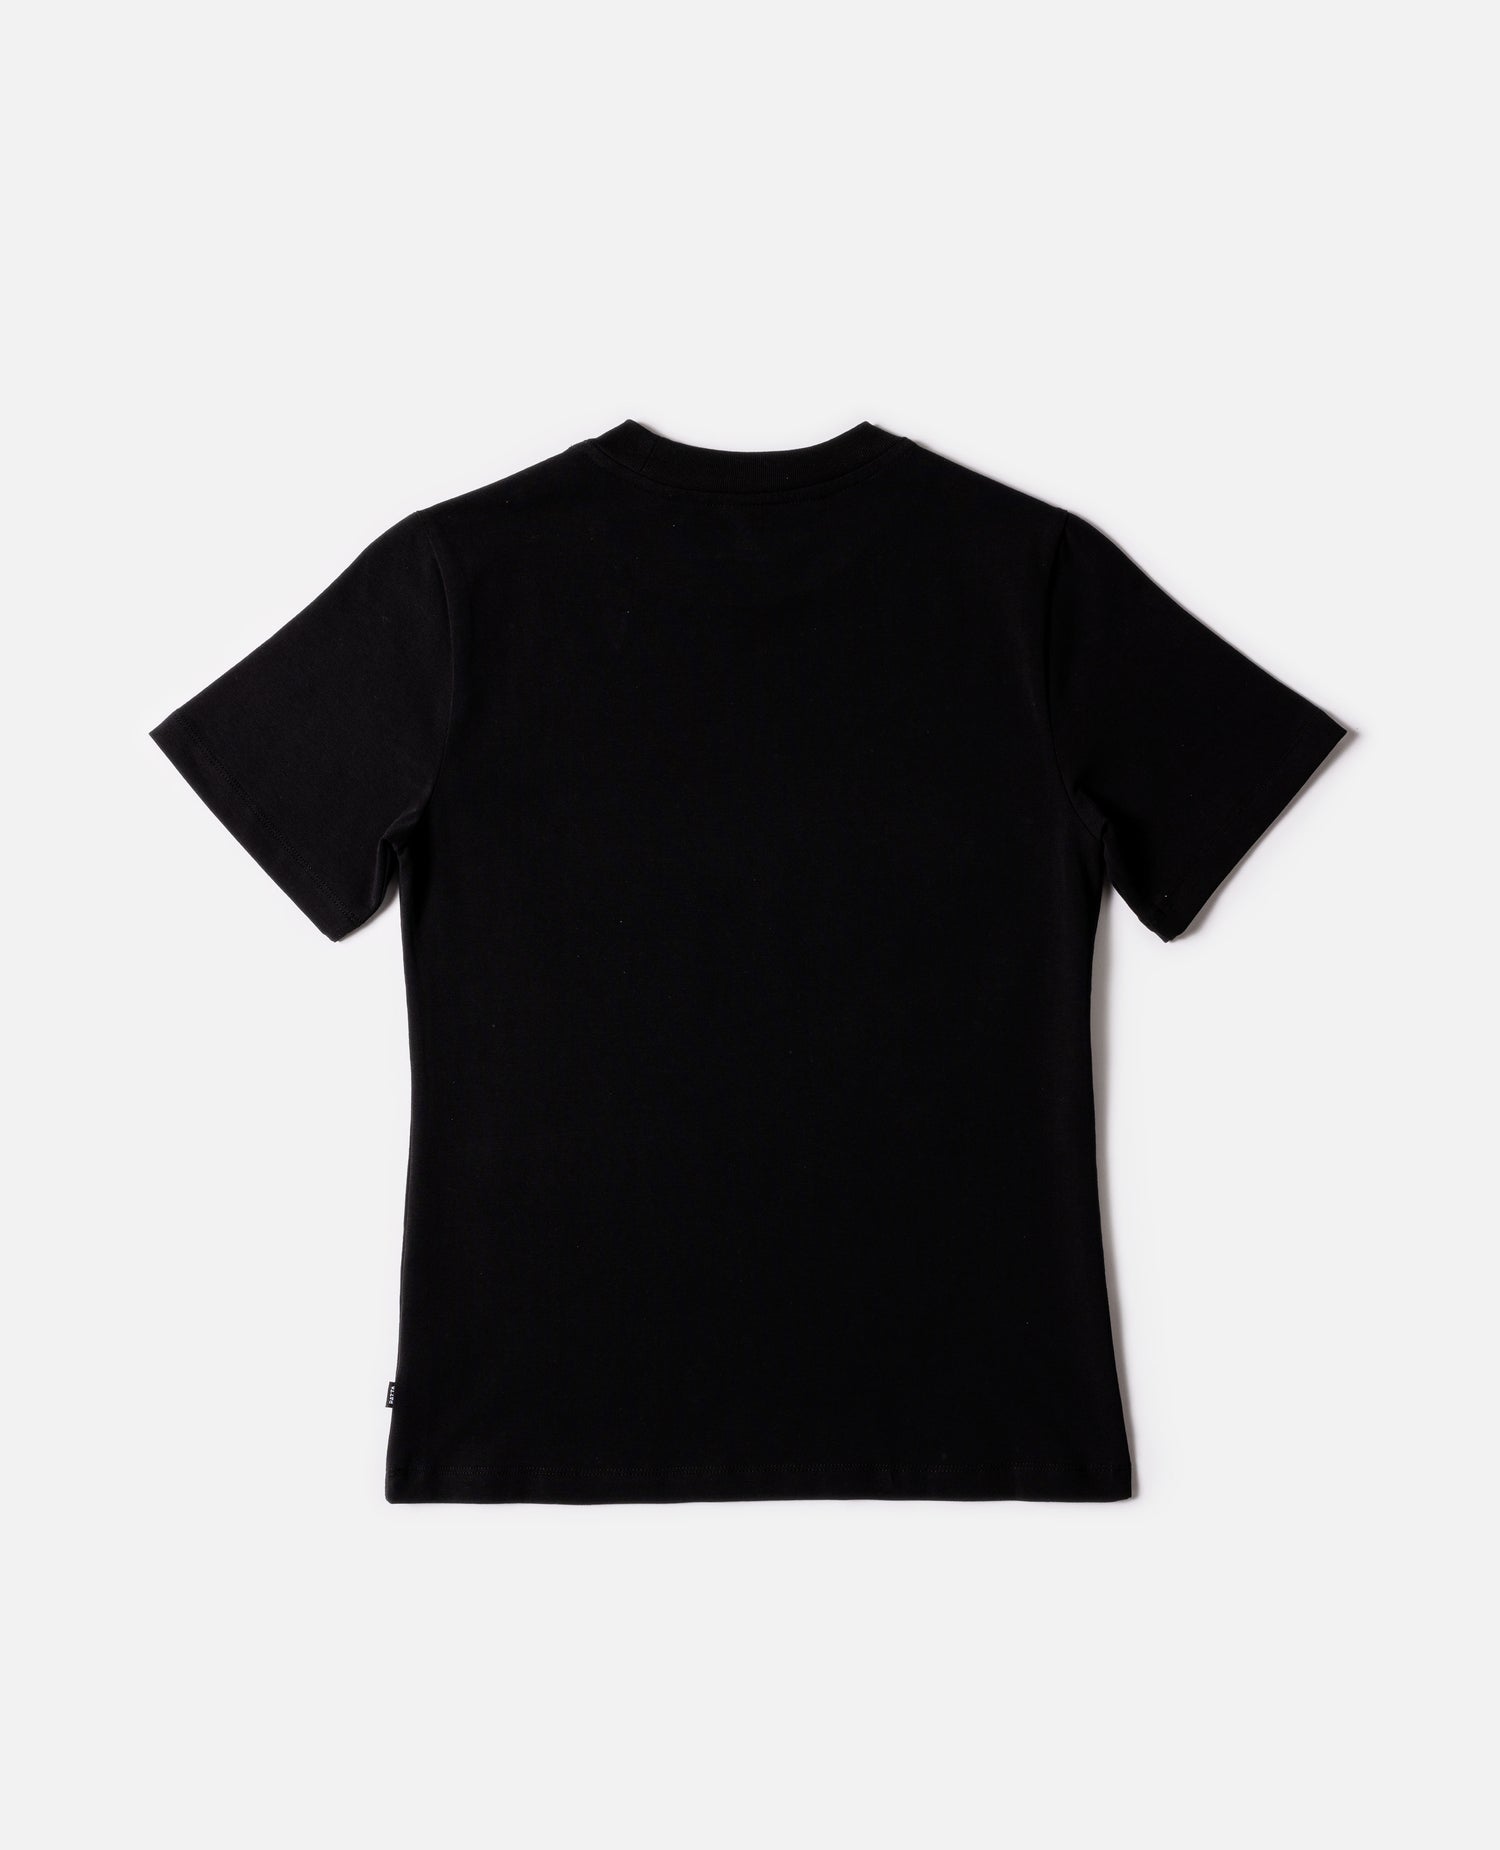 BTS Beyond the Scene T-Shirt (Black) - Medium (Official